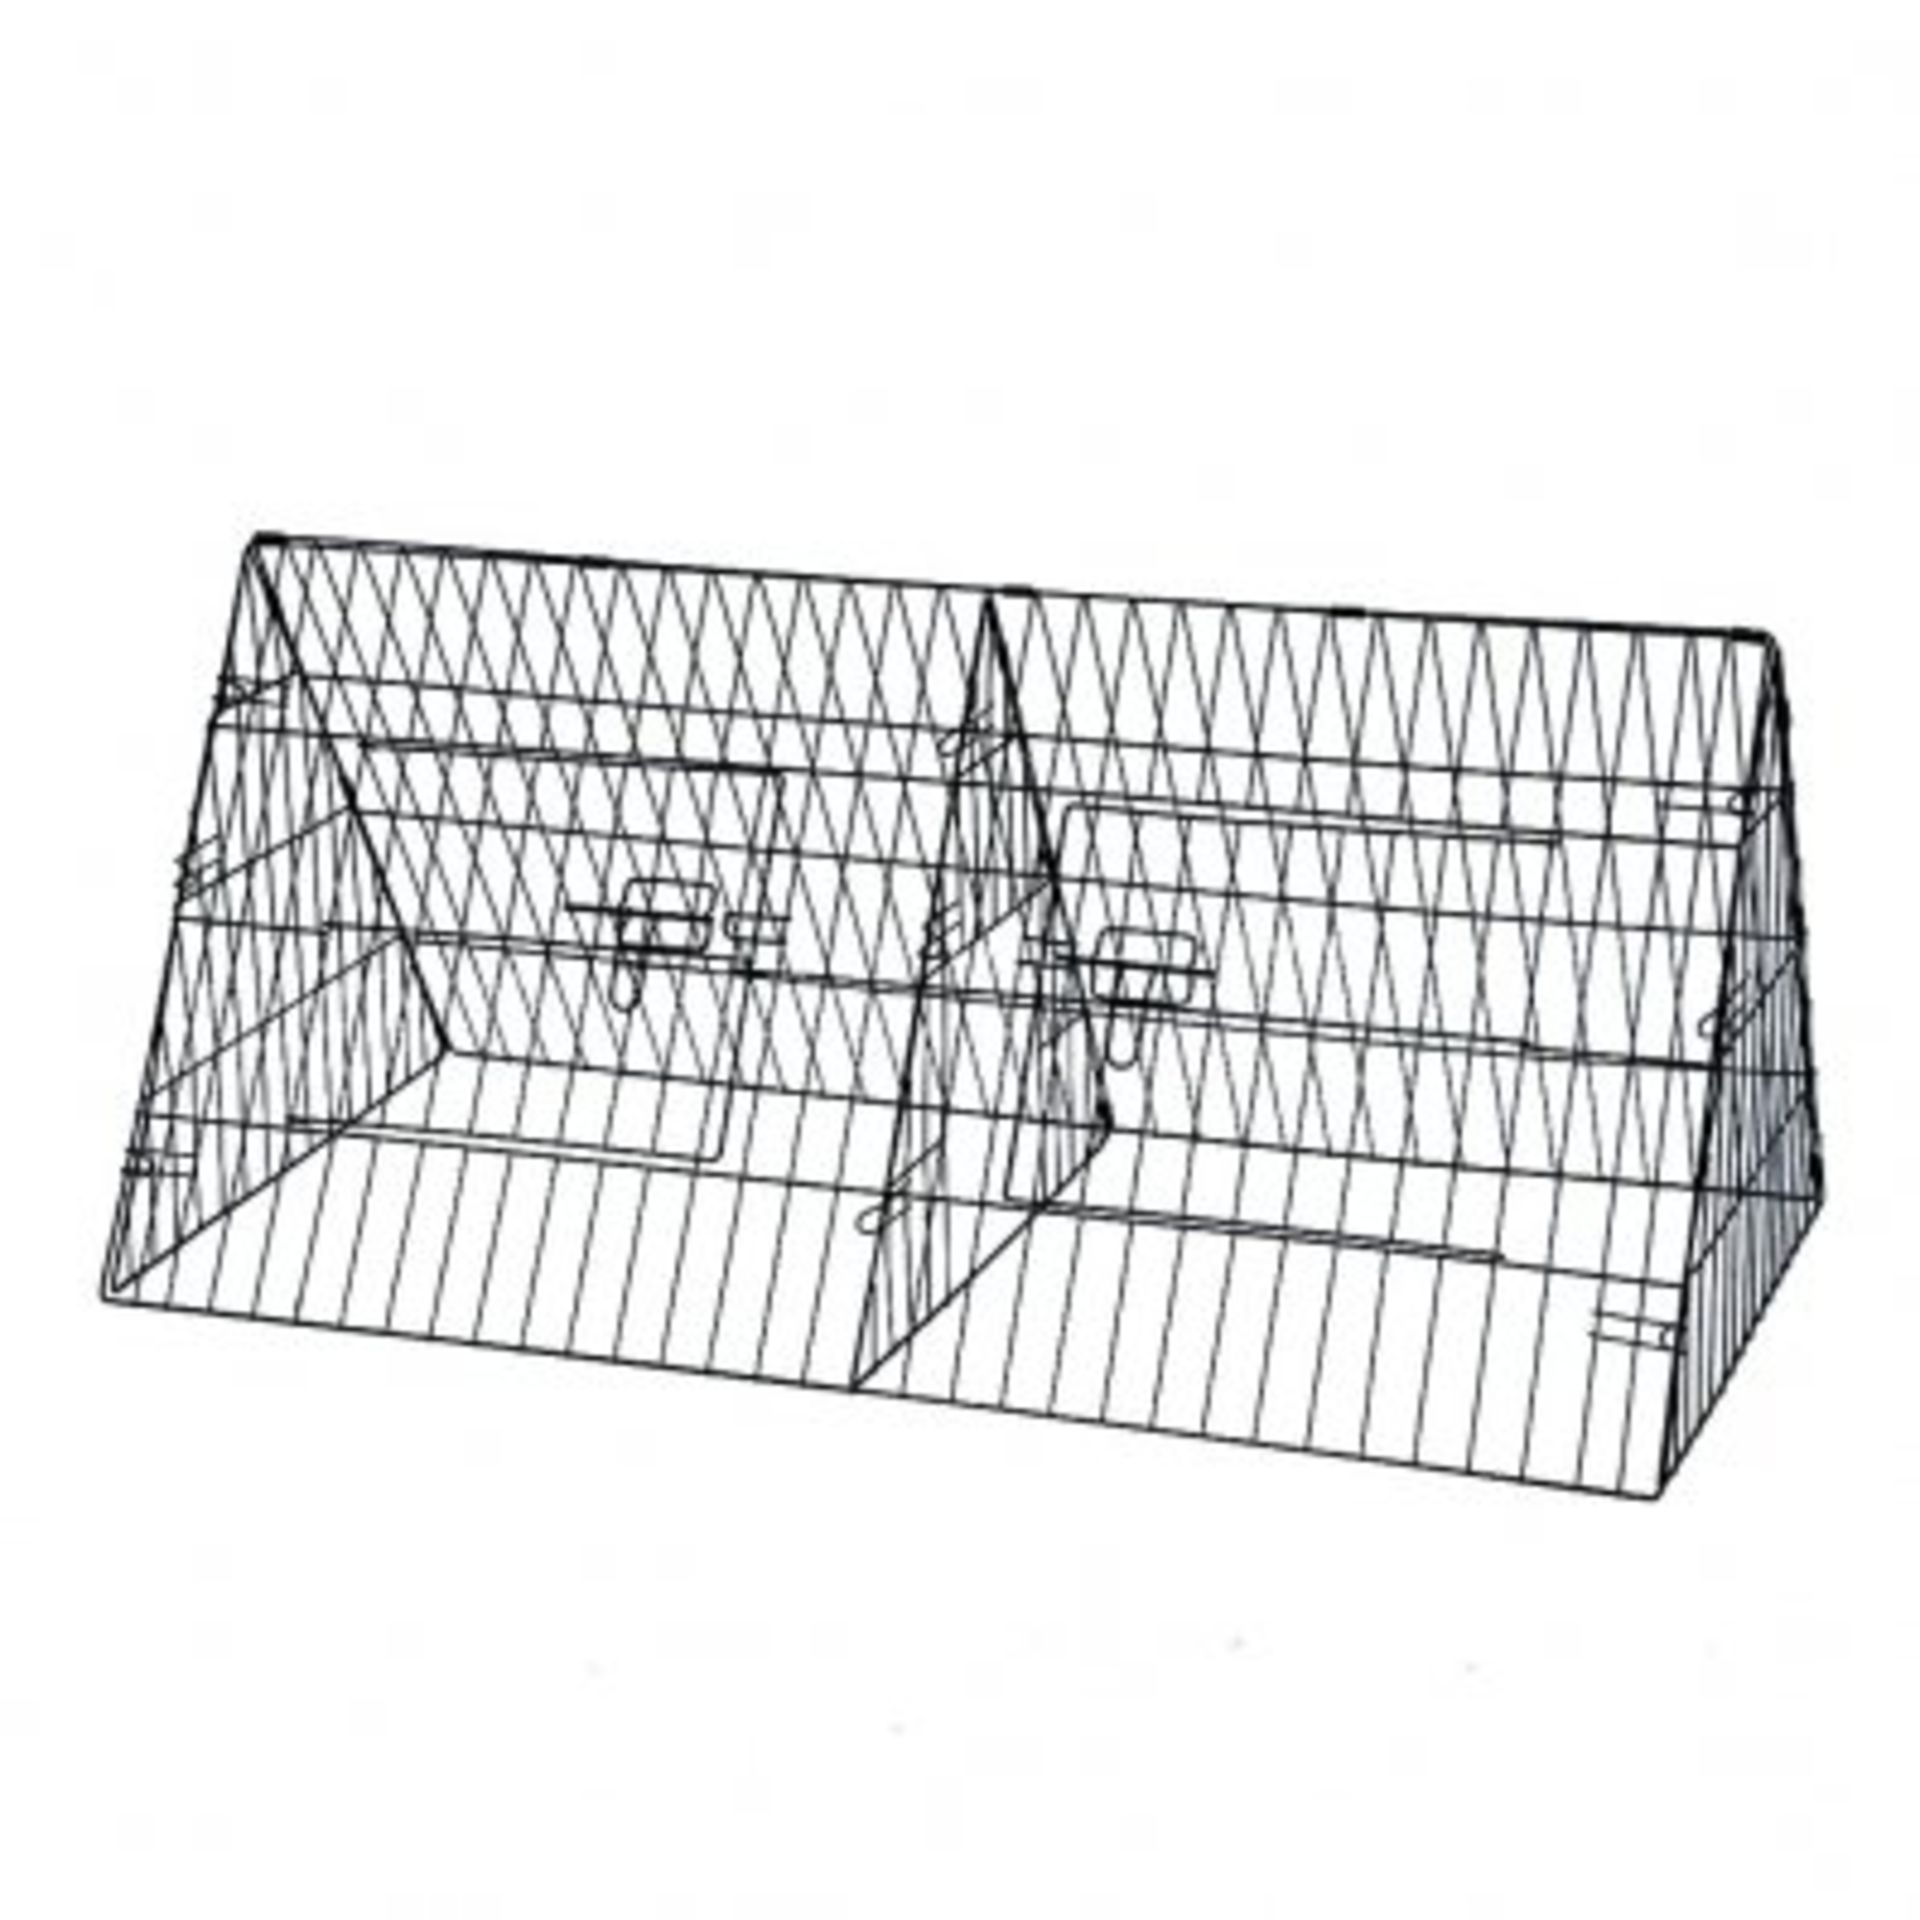 (LF220) 48" Metal Triangle Rabbit Guinea Pig Pet Hutch Run Cage Playpen The triangle hutch...